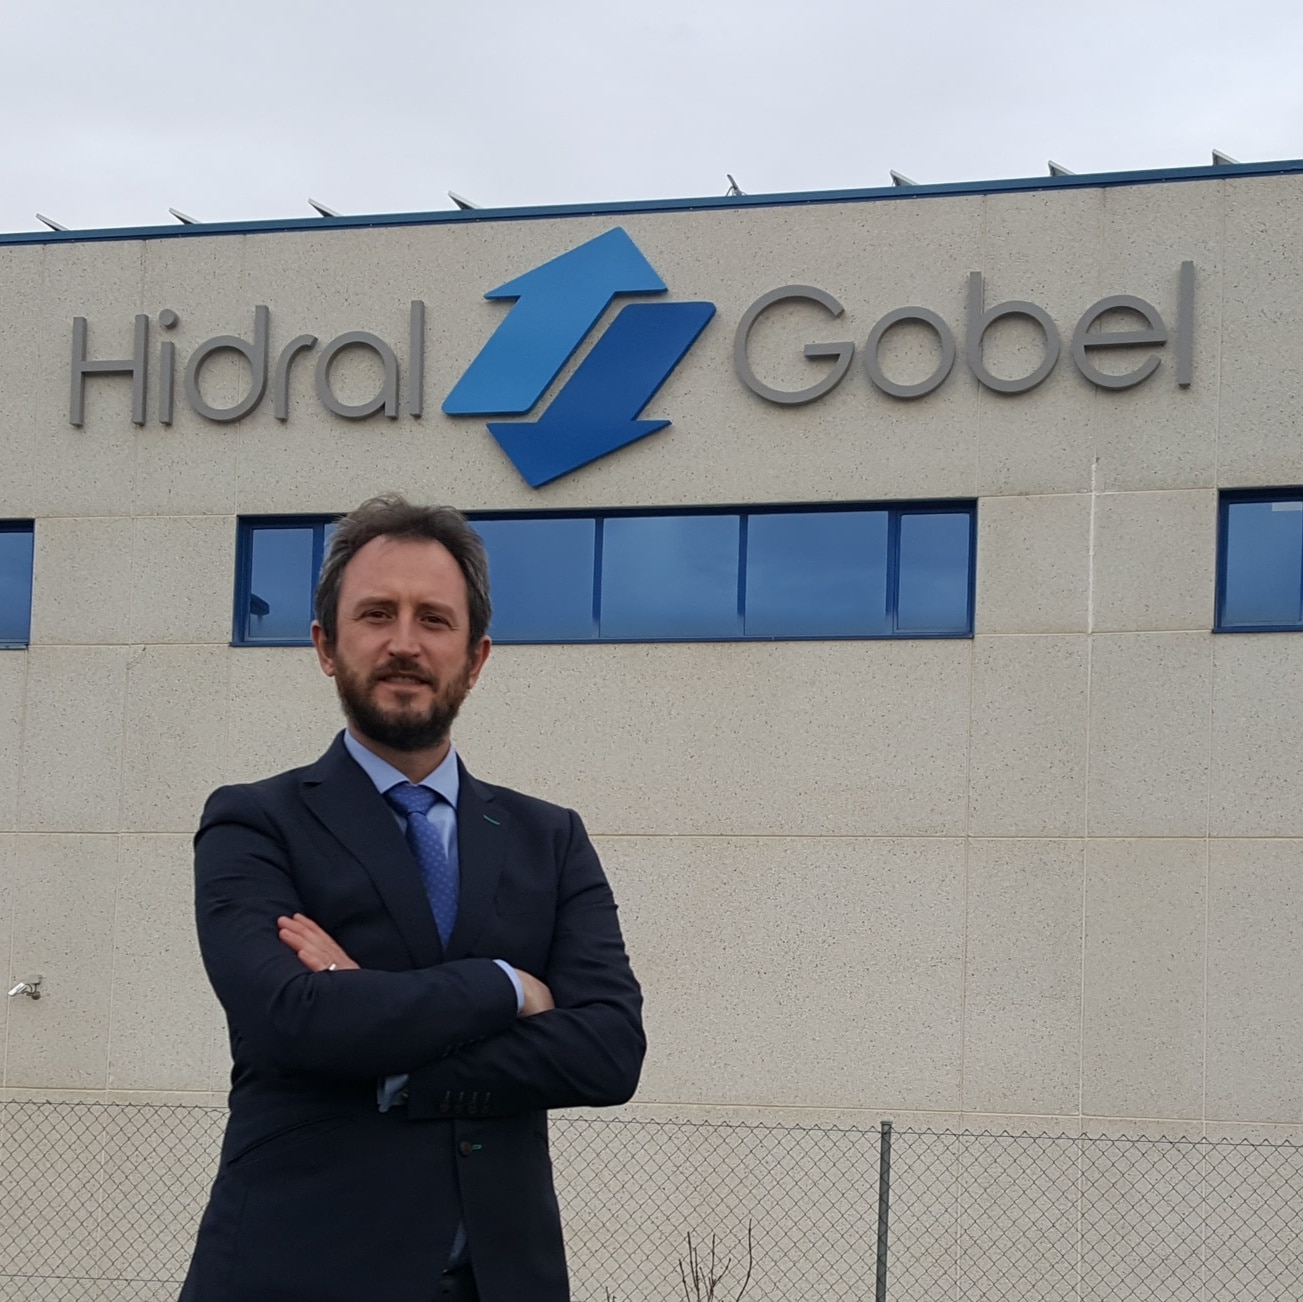 Hidral Gobel Managing Director Fabio Sgardi: Keeping an eye on the PSVAR review